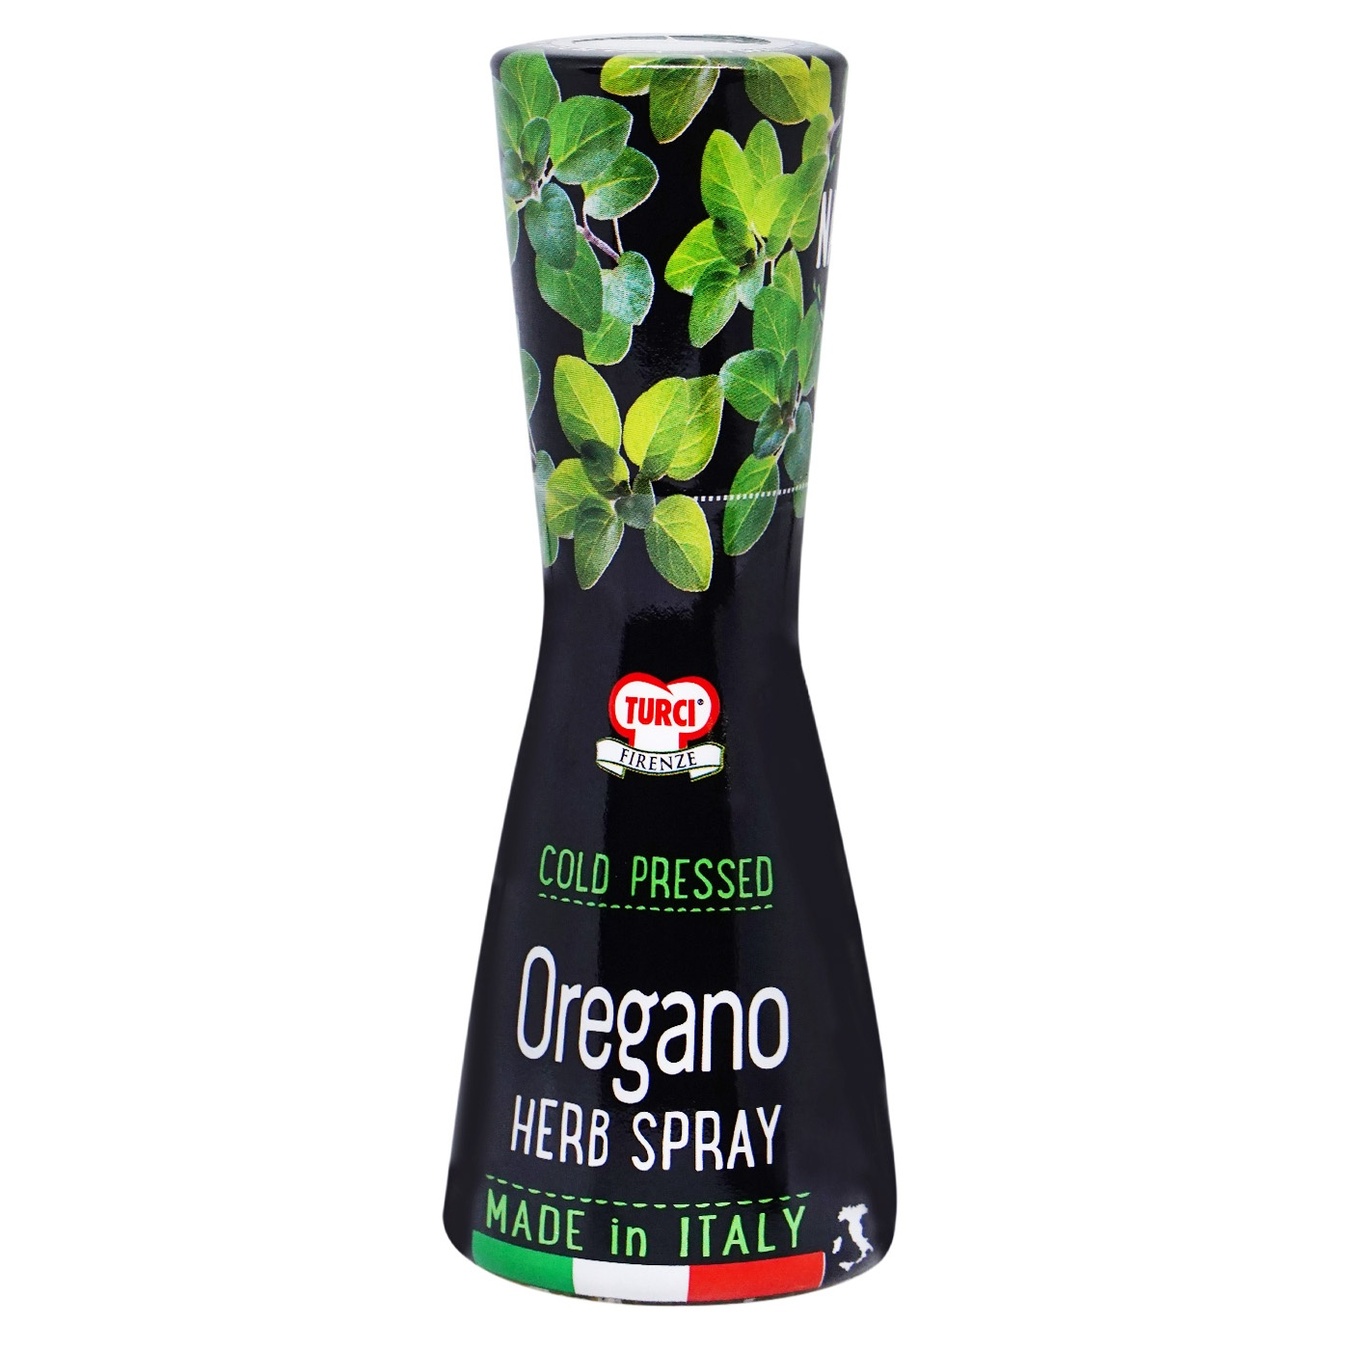 Seasoning Turci natural extract of oregano in sunflower oil 40 ml